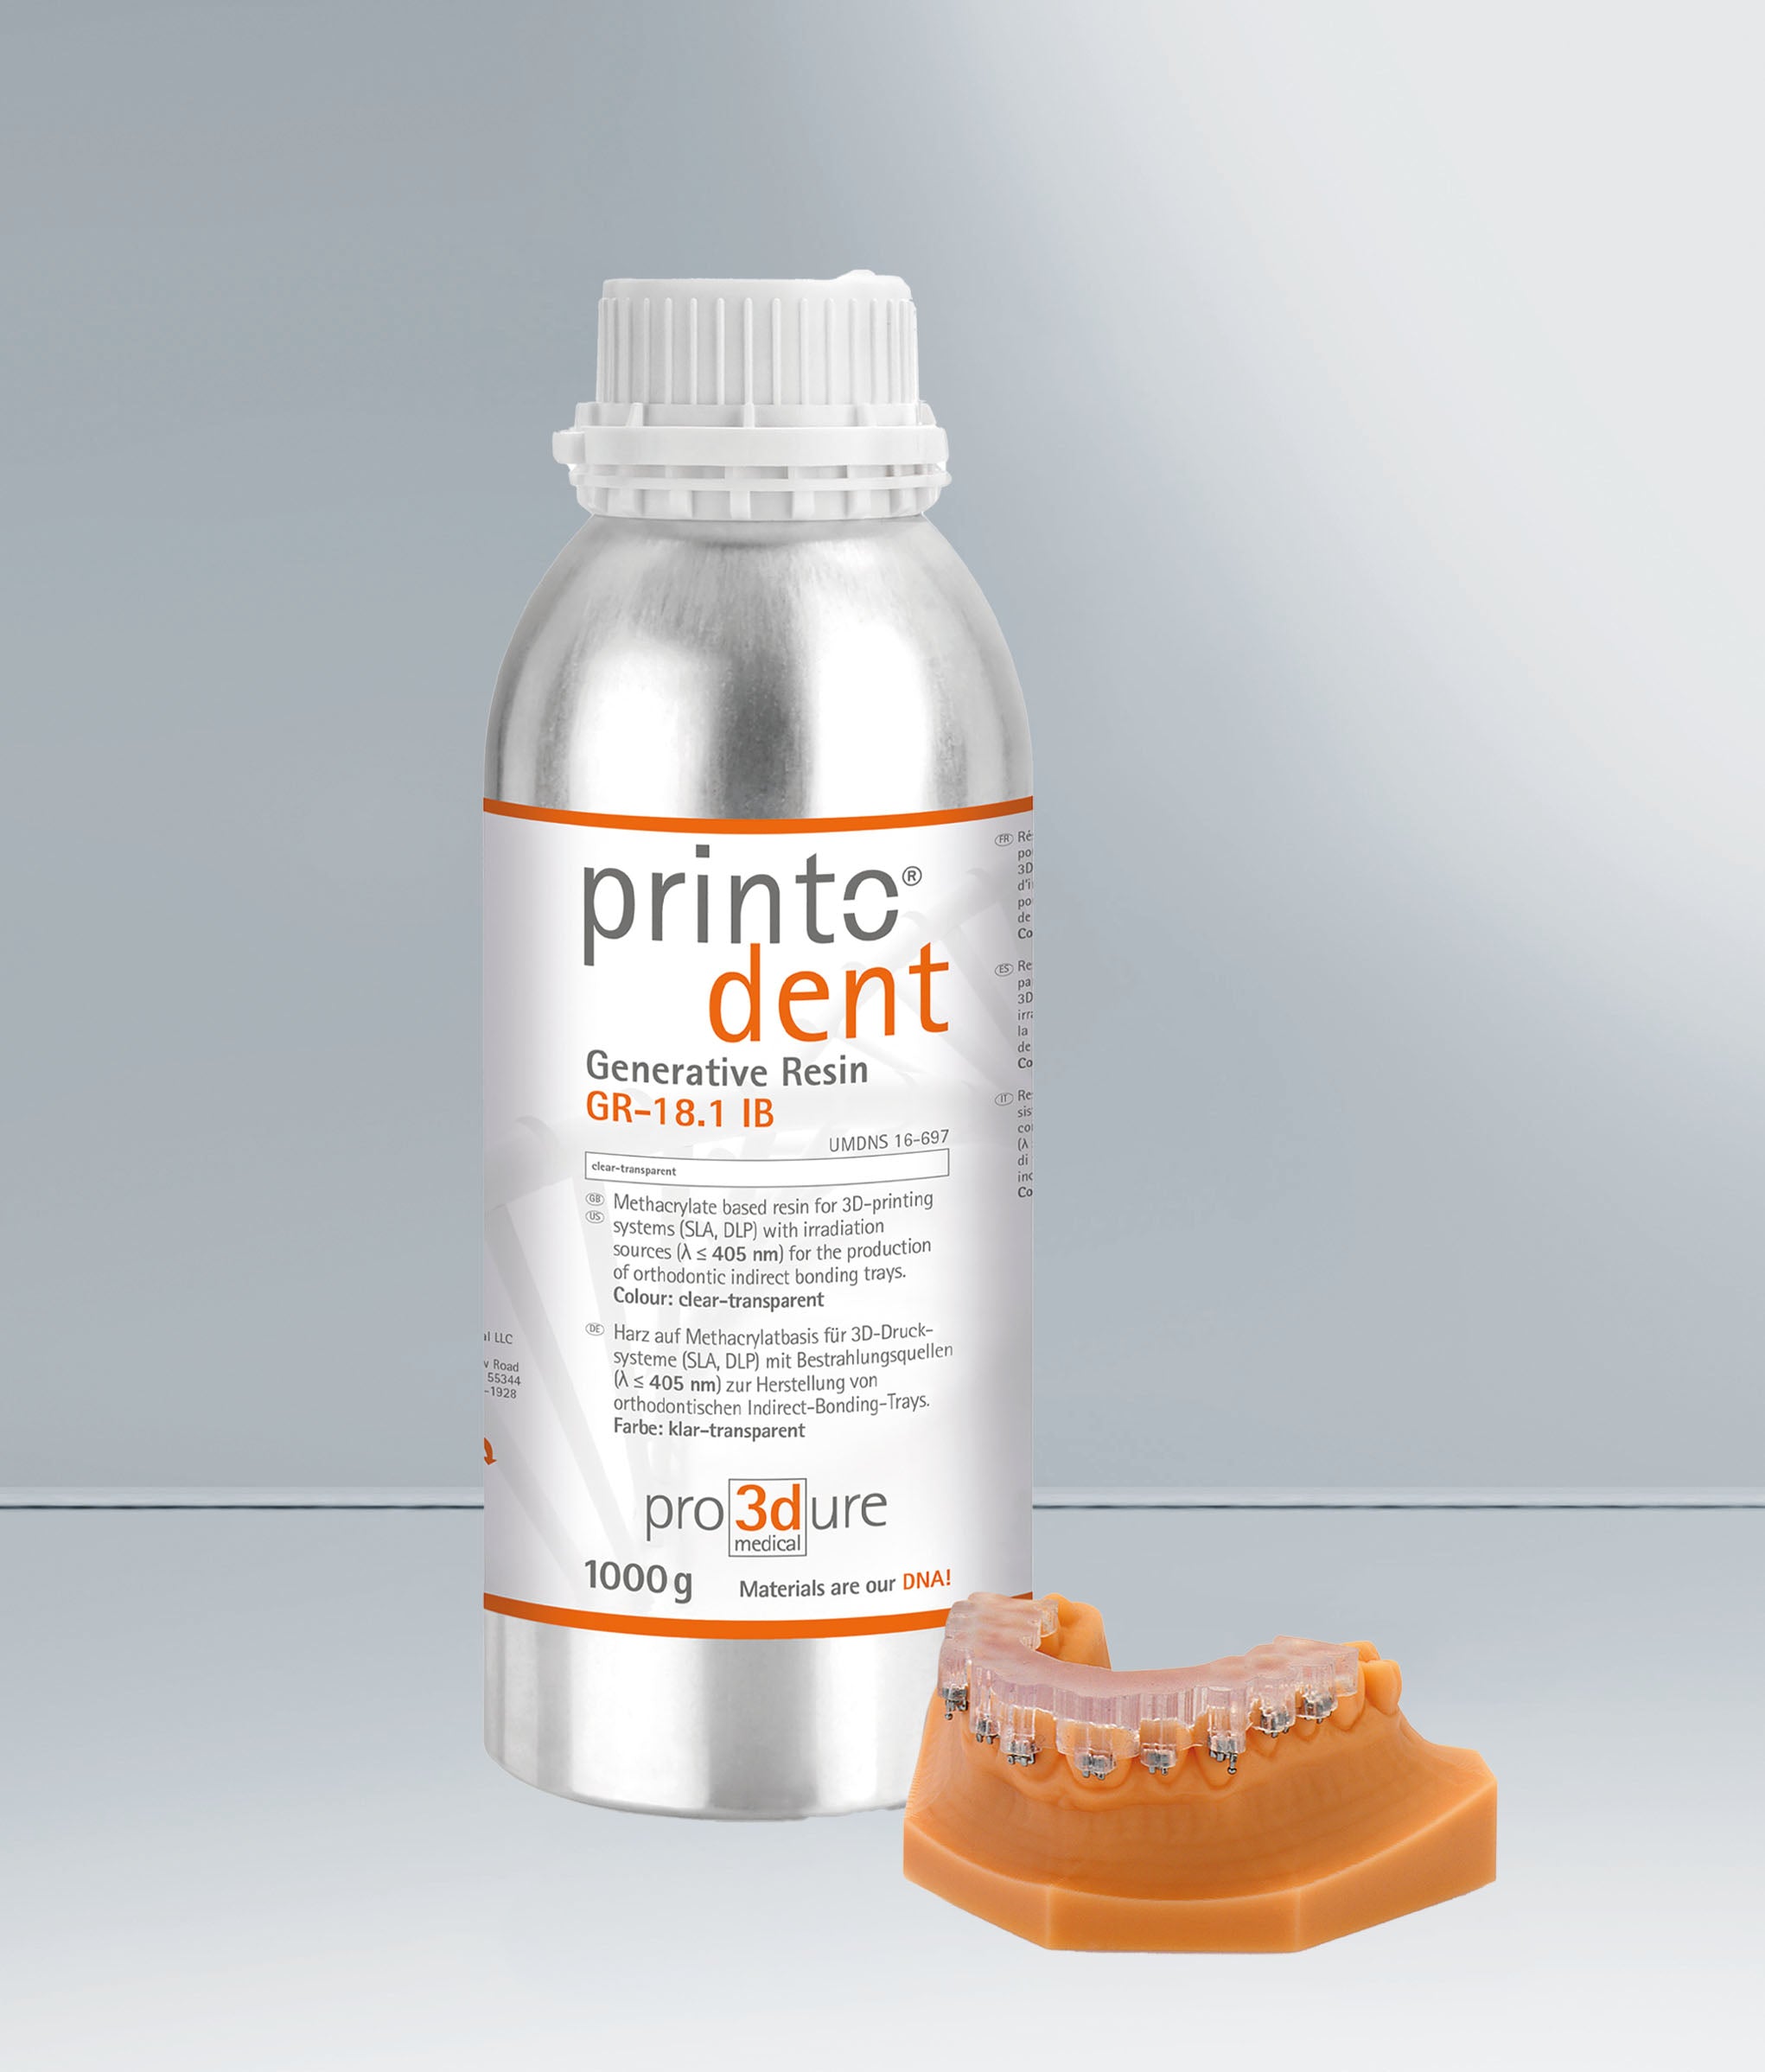 Pro3dure Printodent® GR-18.1 IB